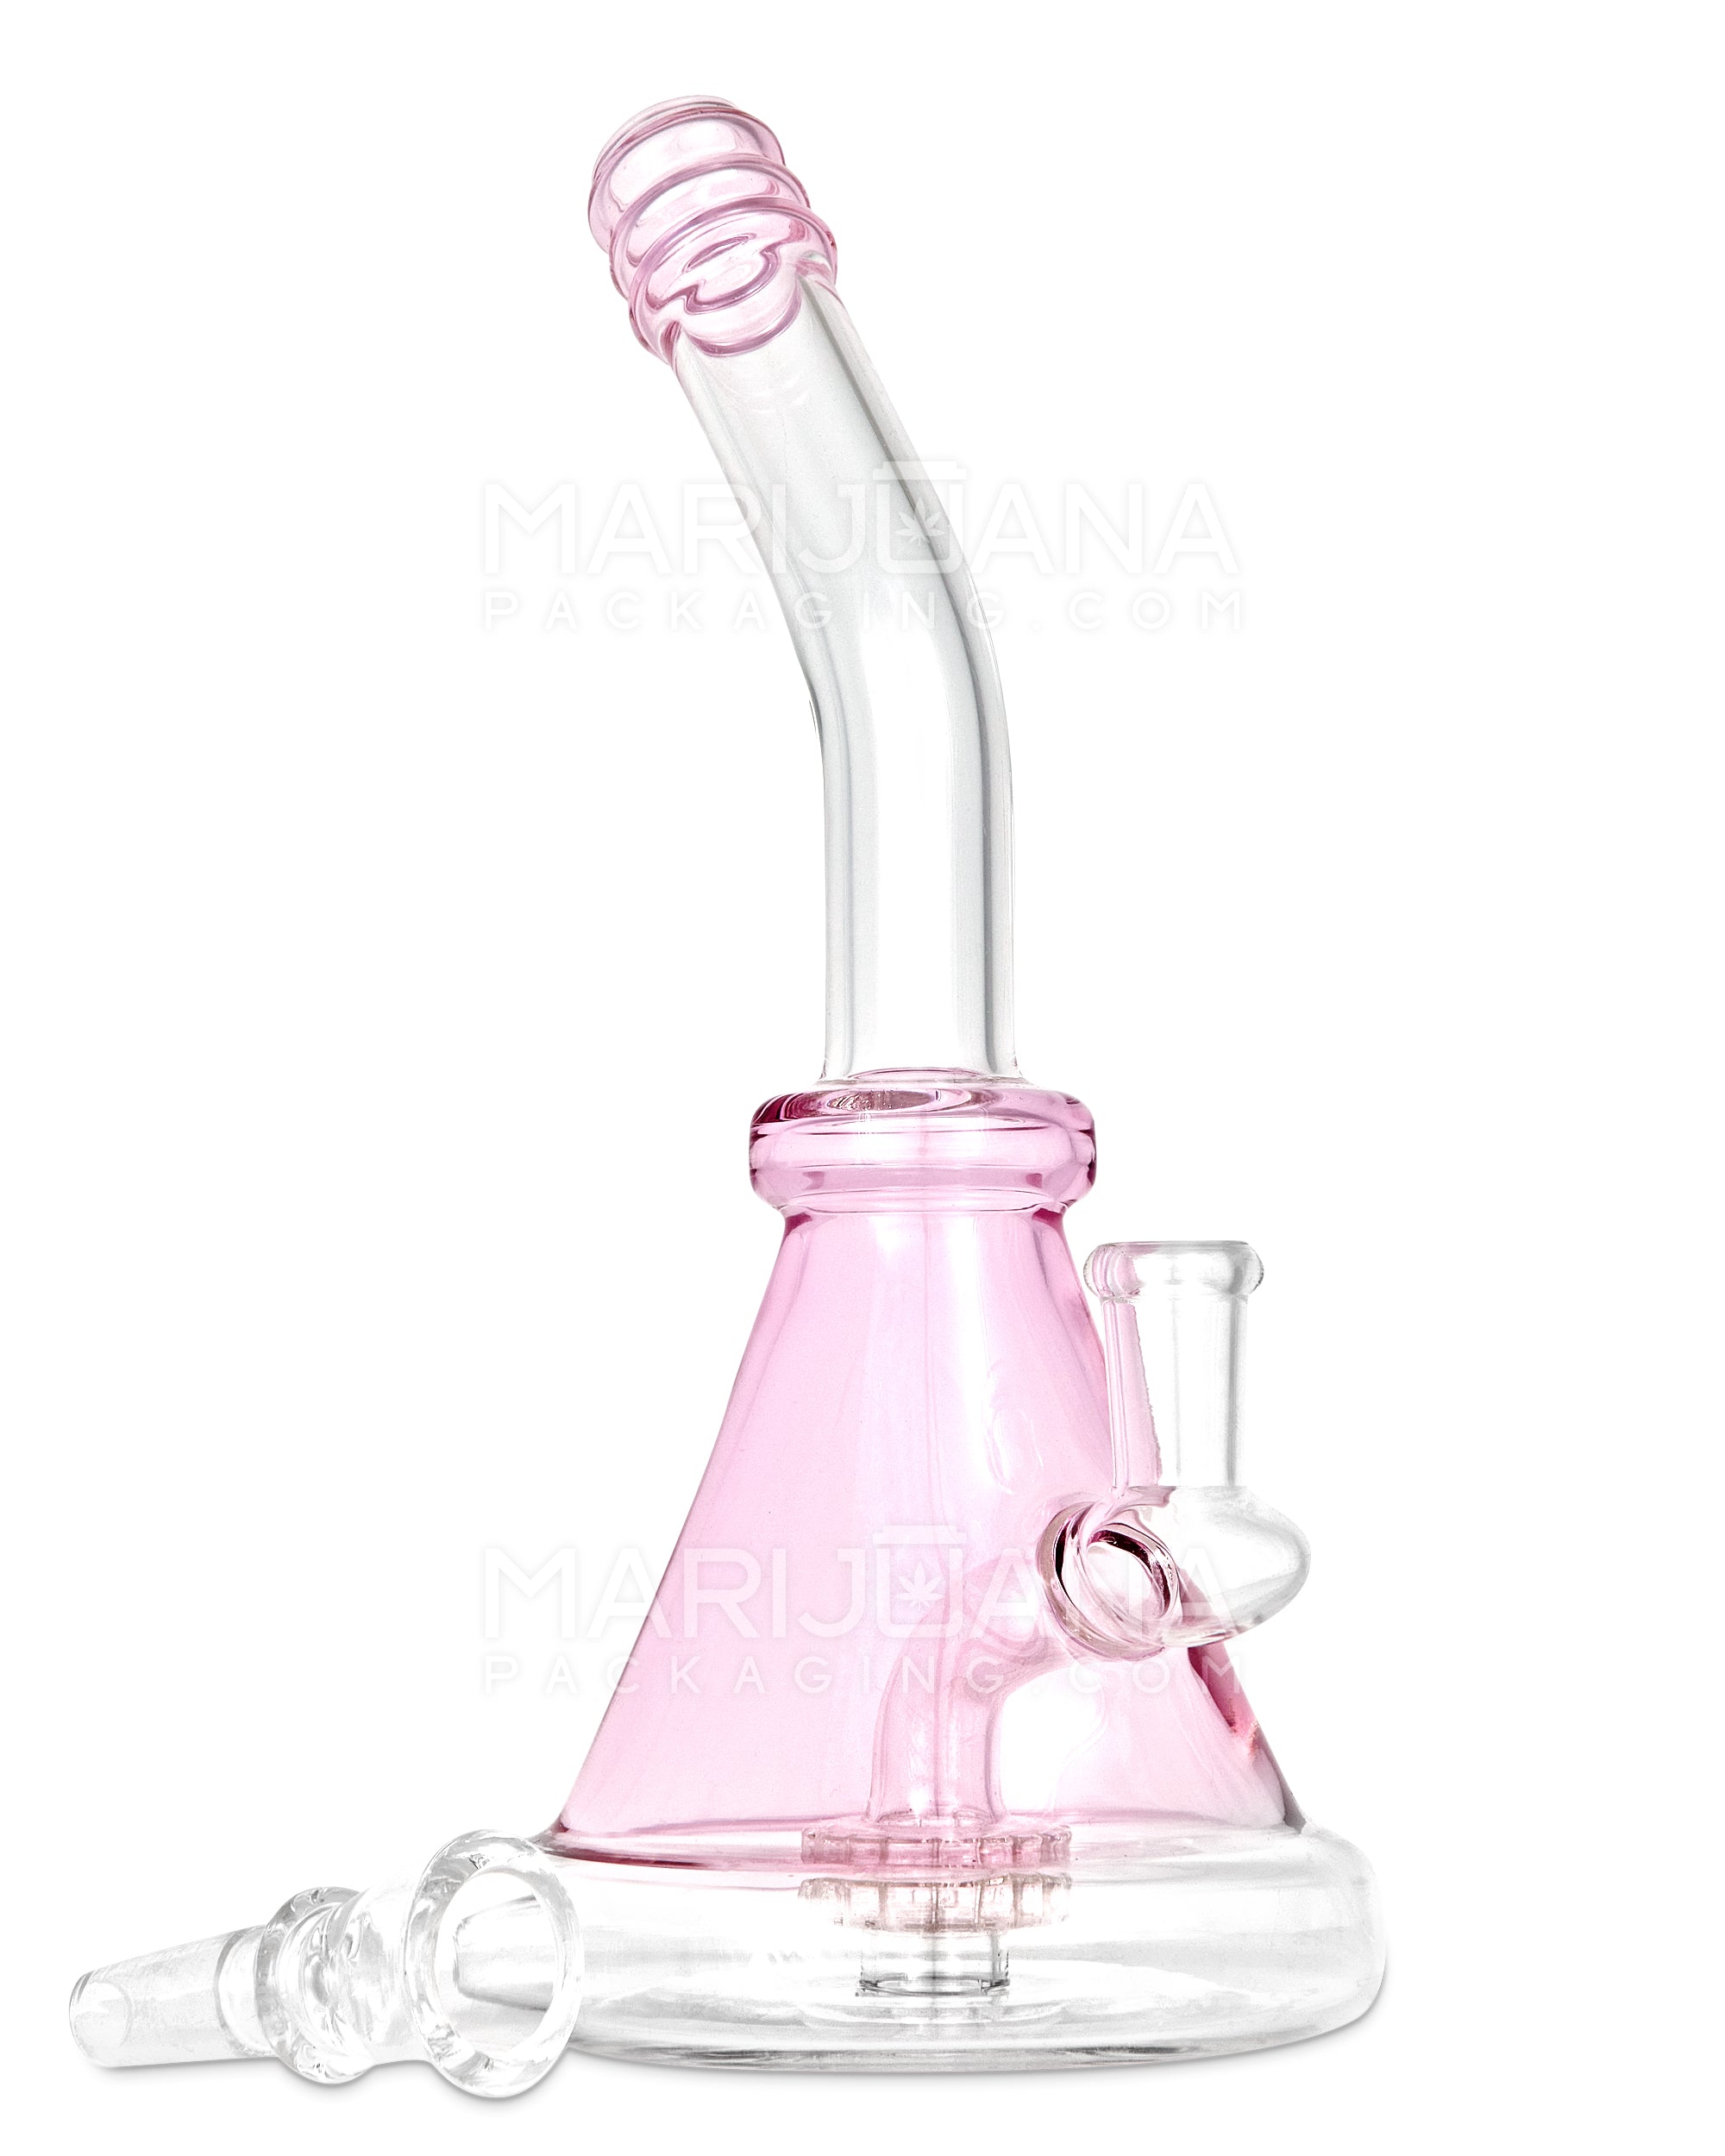 Bent Neck Showerhead Percolator Glass Beaker Water Pipe | 10in Tall - 14mm Bowl - Pink - 2